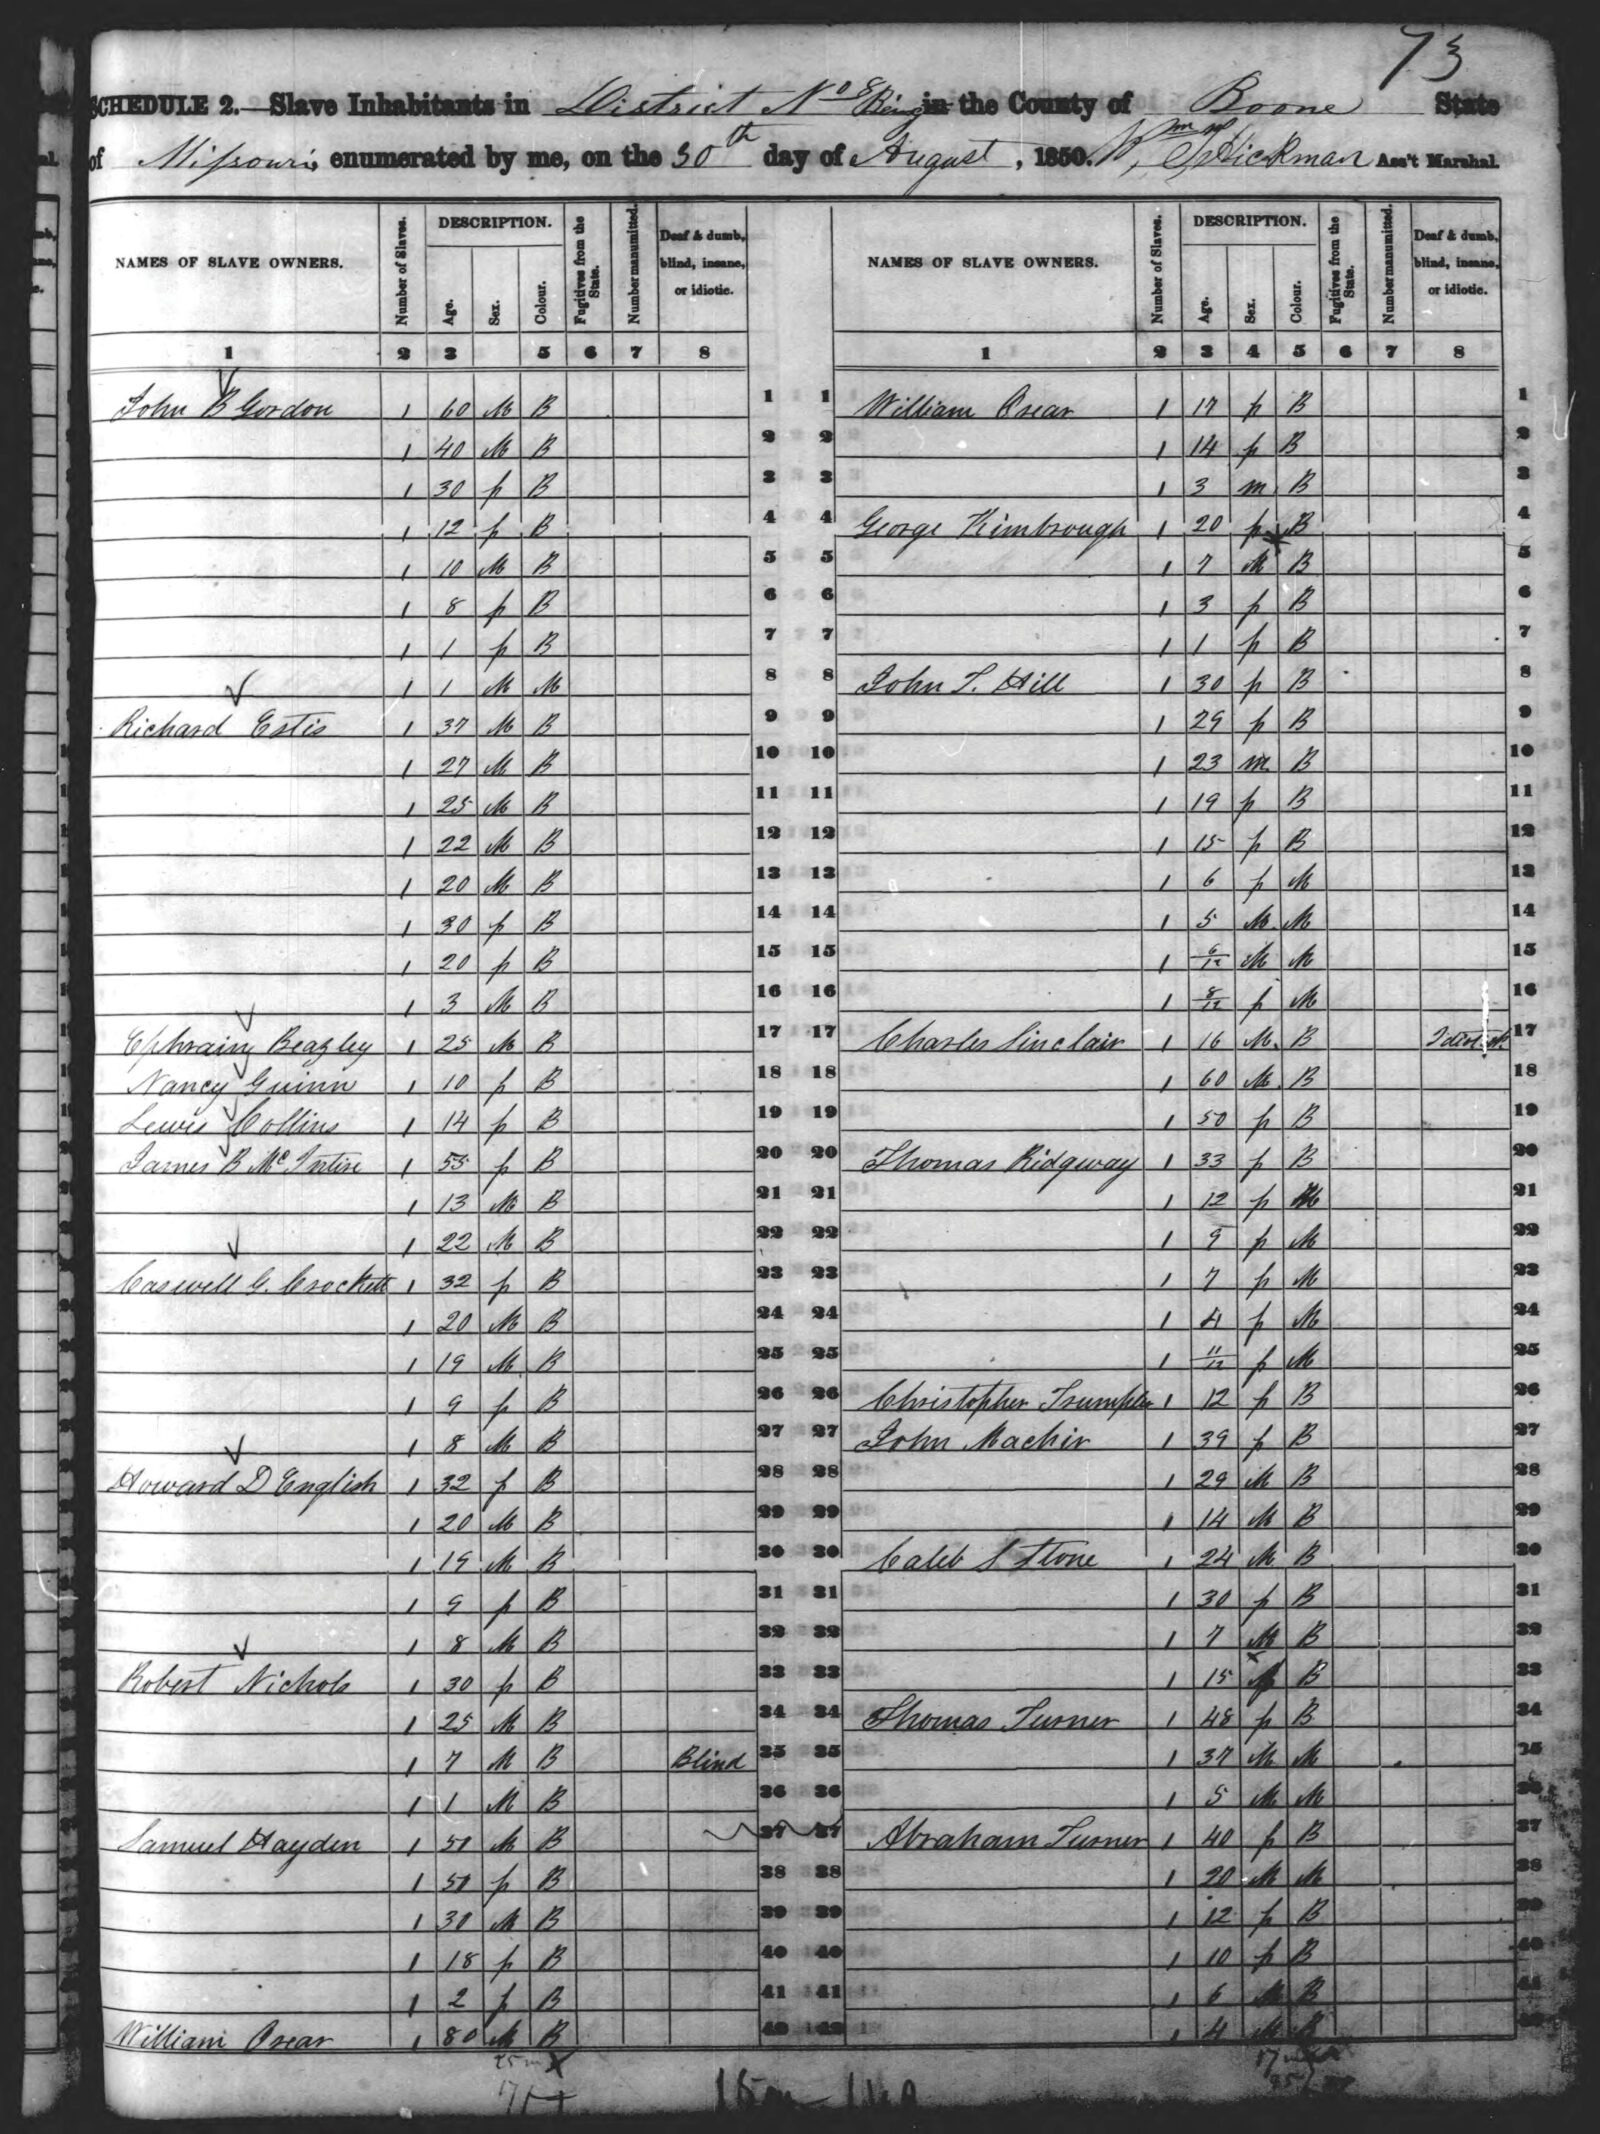 1850 Slave Schedule. (Courtesy of sos.mo.gov archives)